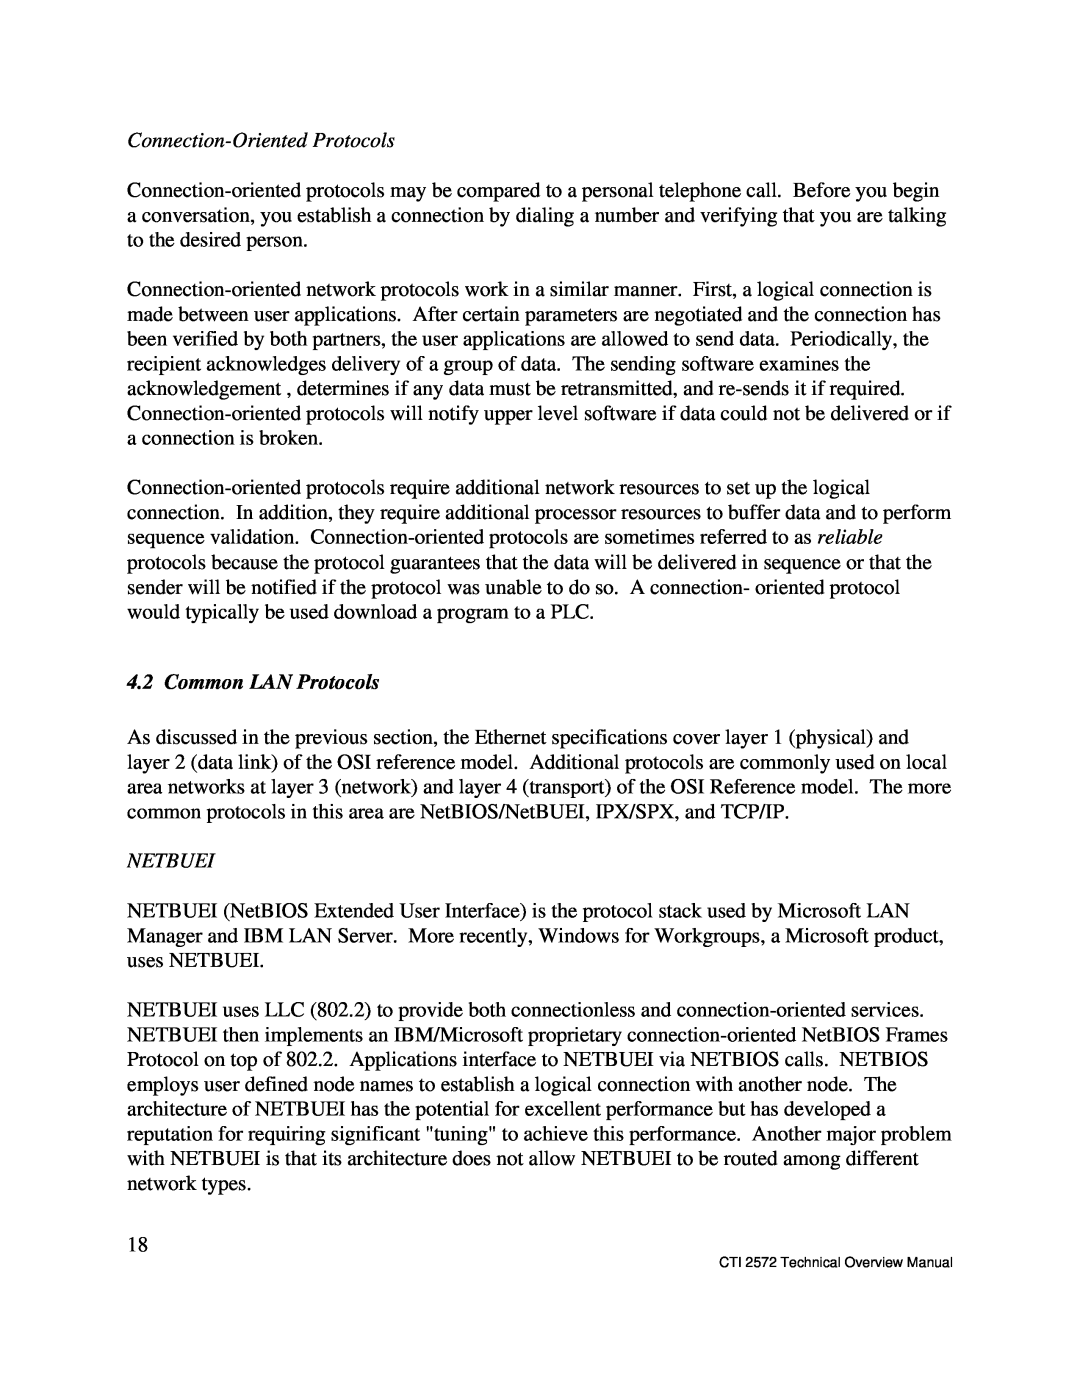 IBM CTI 2572 manual Common LAN Protocols, Connection-Oriented Protocols, Netbuei 